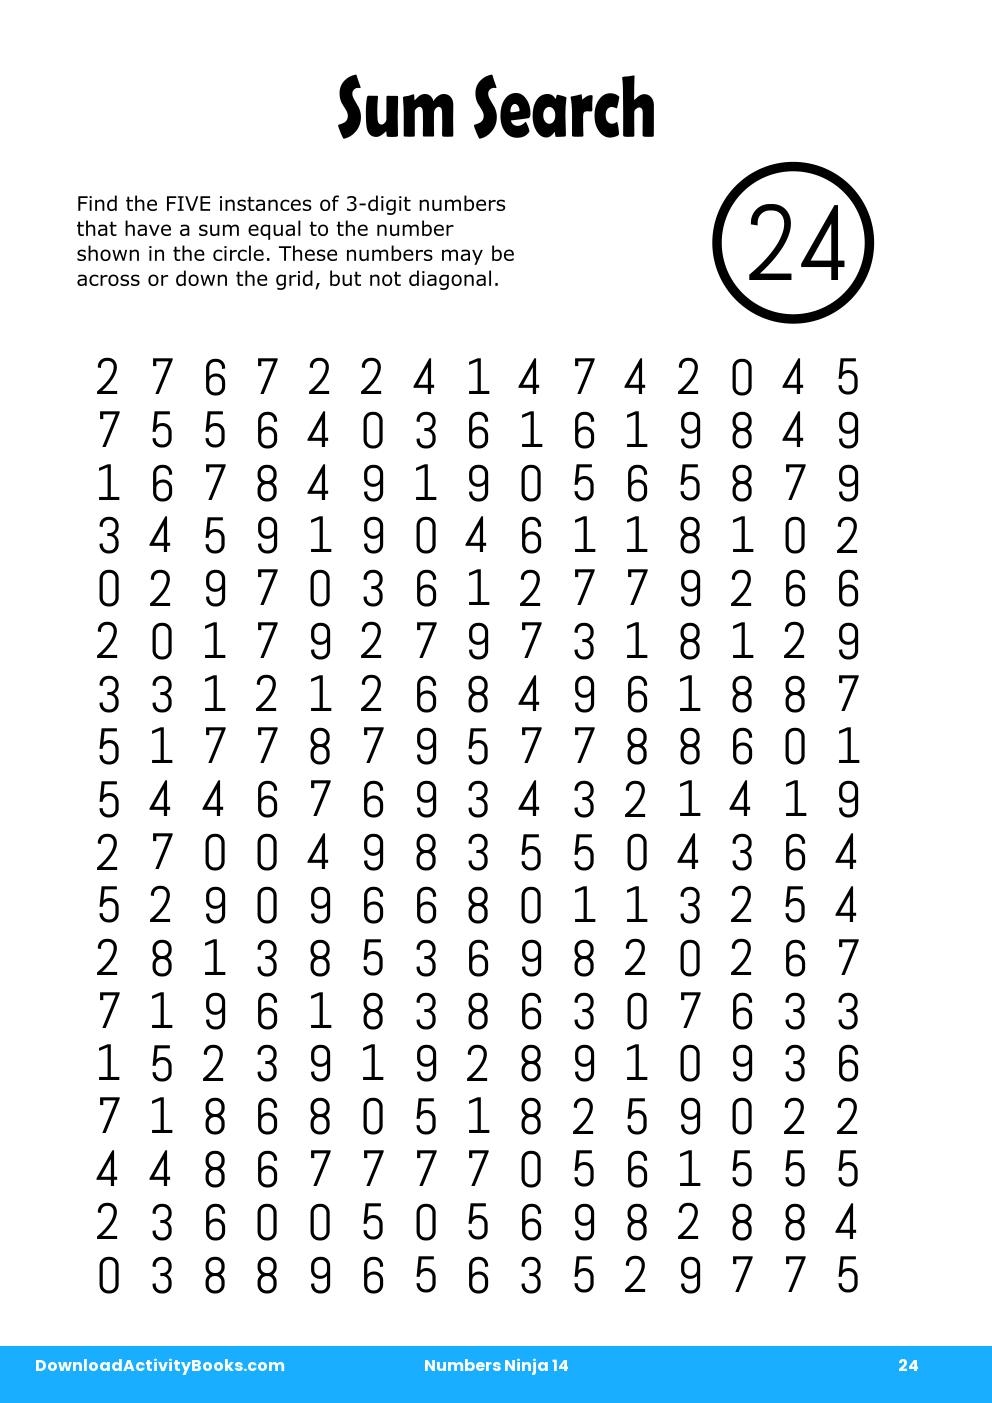 Sum Search in Numbers Ninja 14